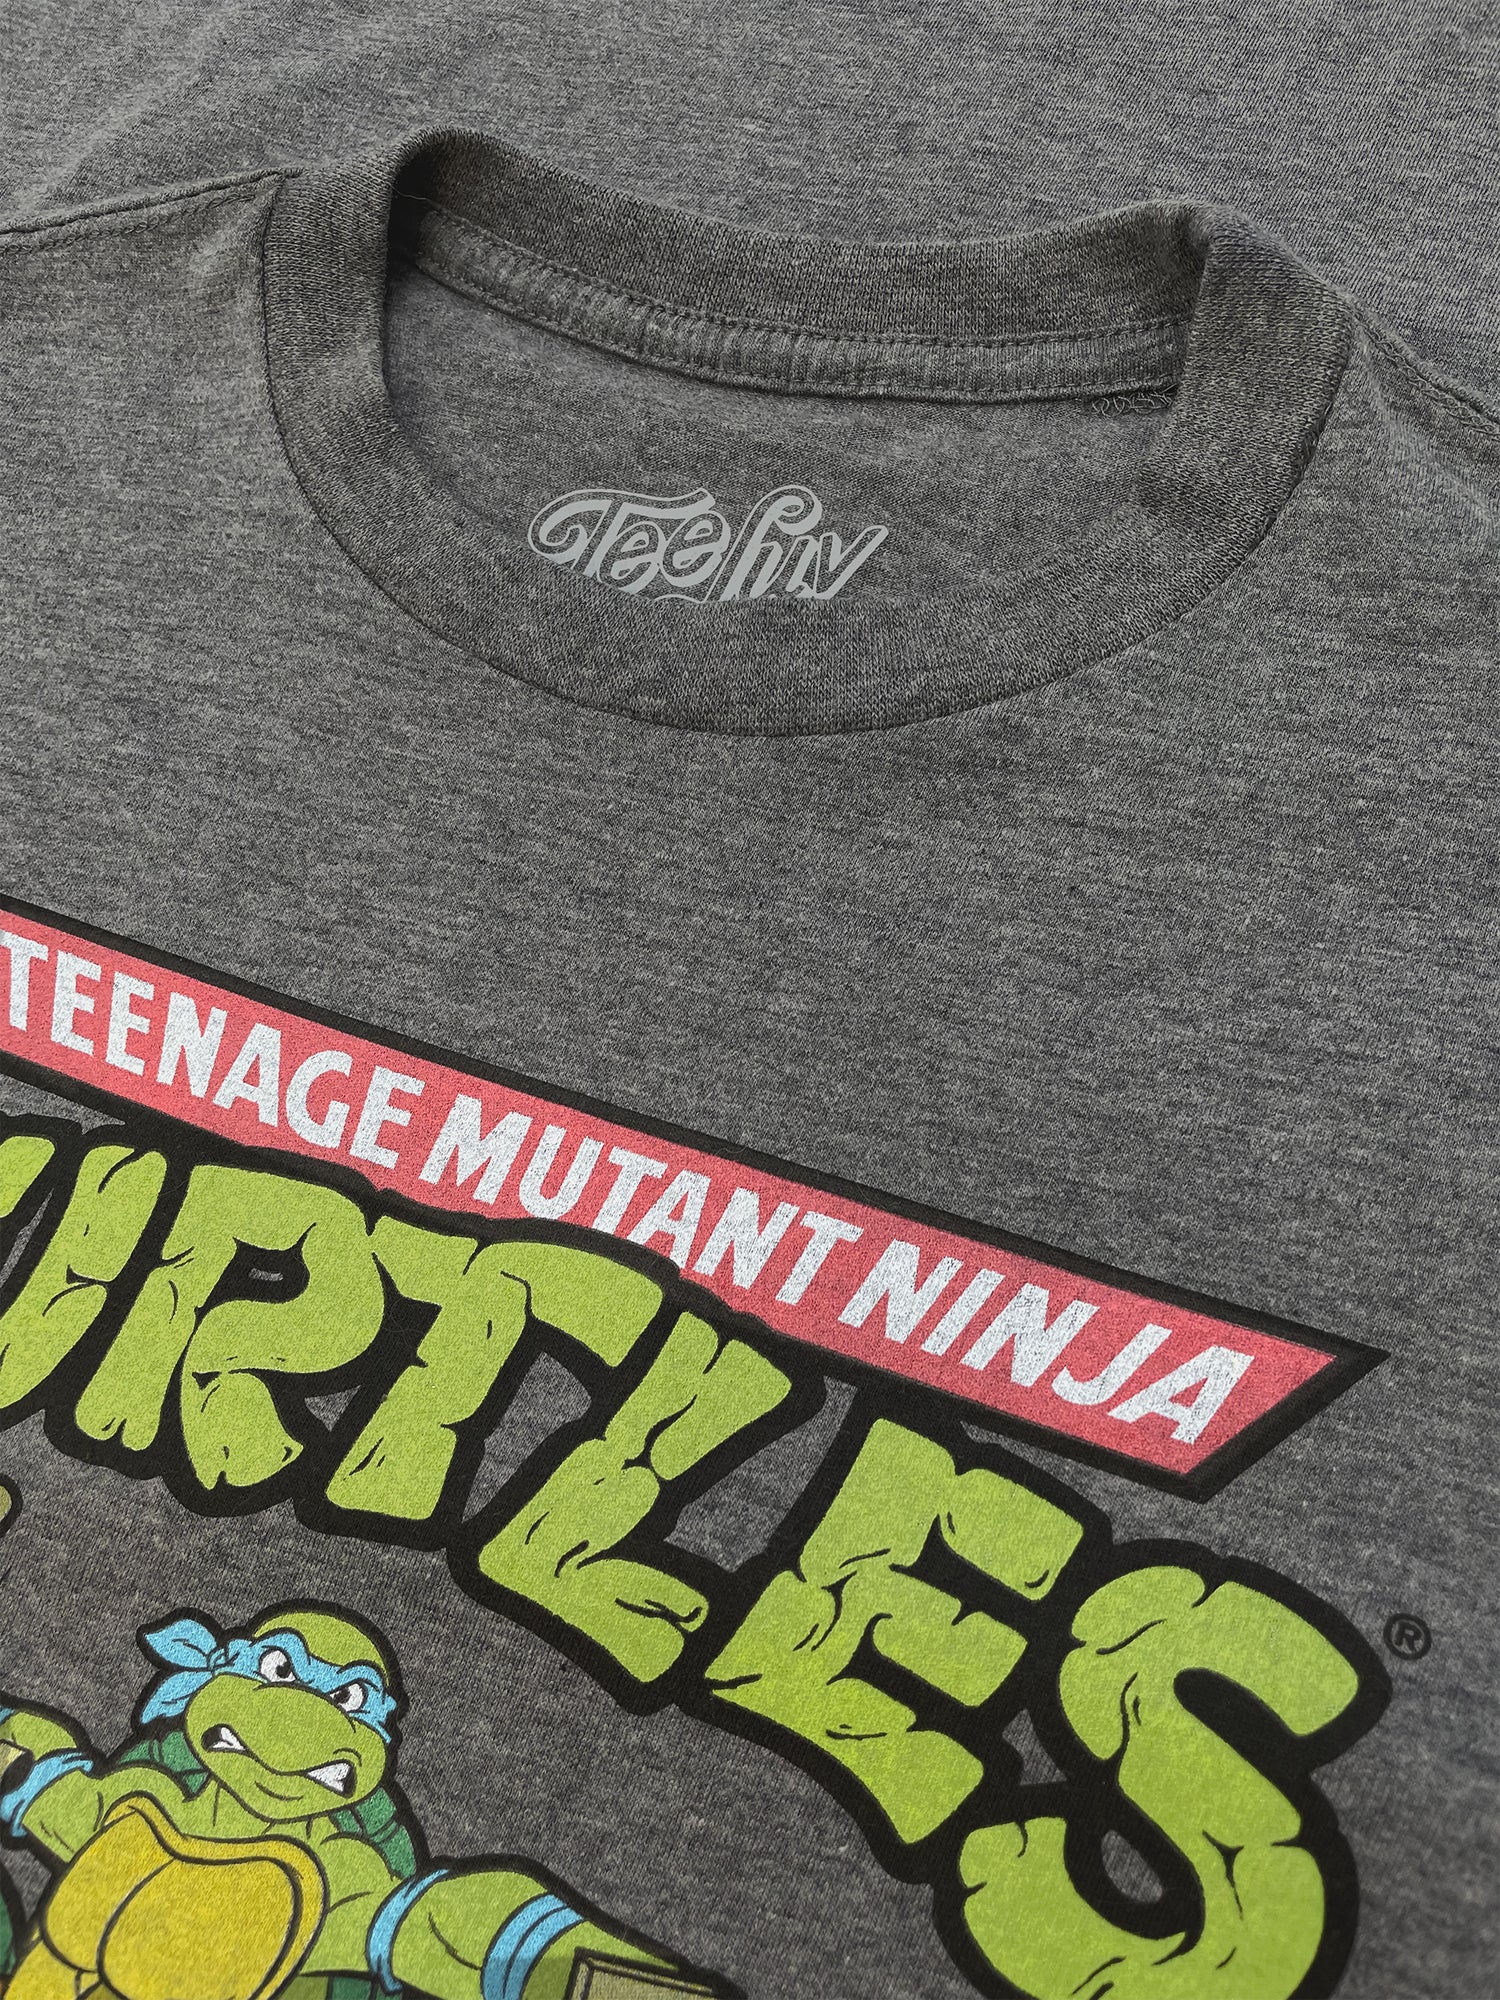 Donatello | Teenage mutant ninja turtles | Essential T-Shirt